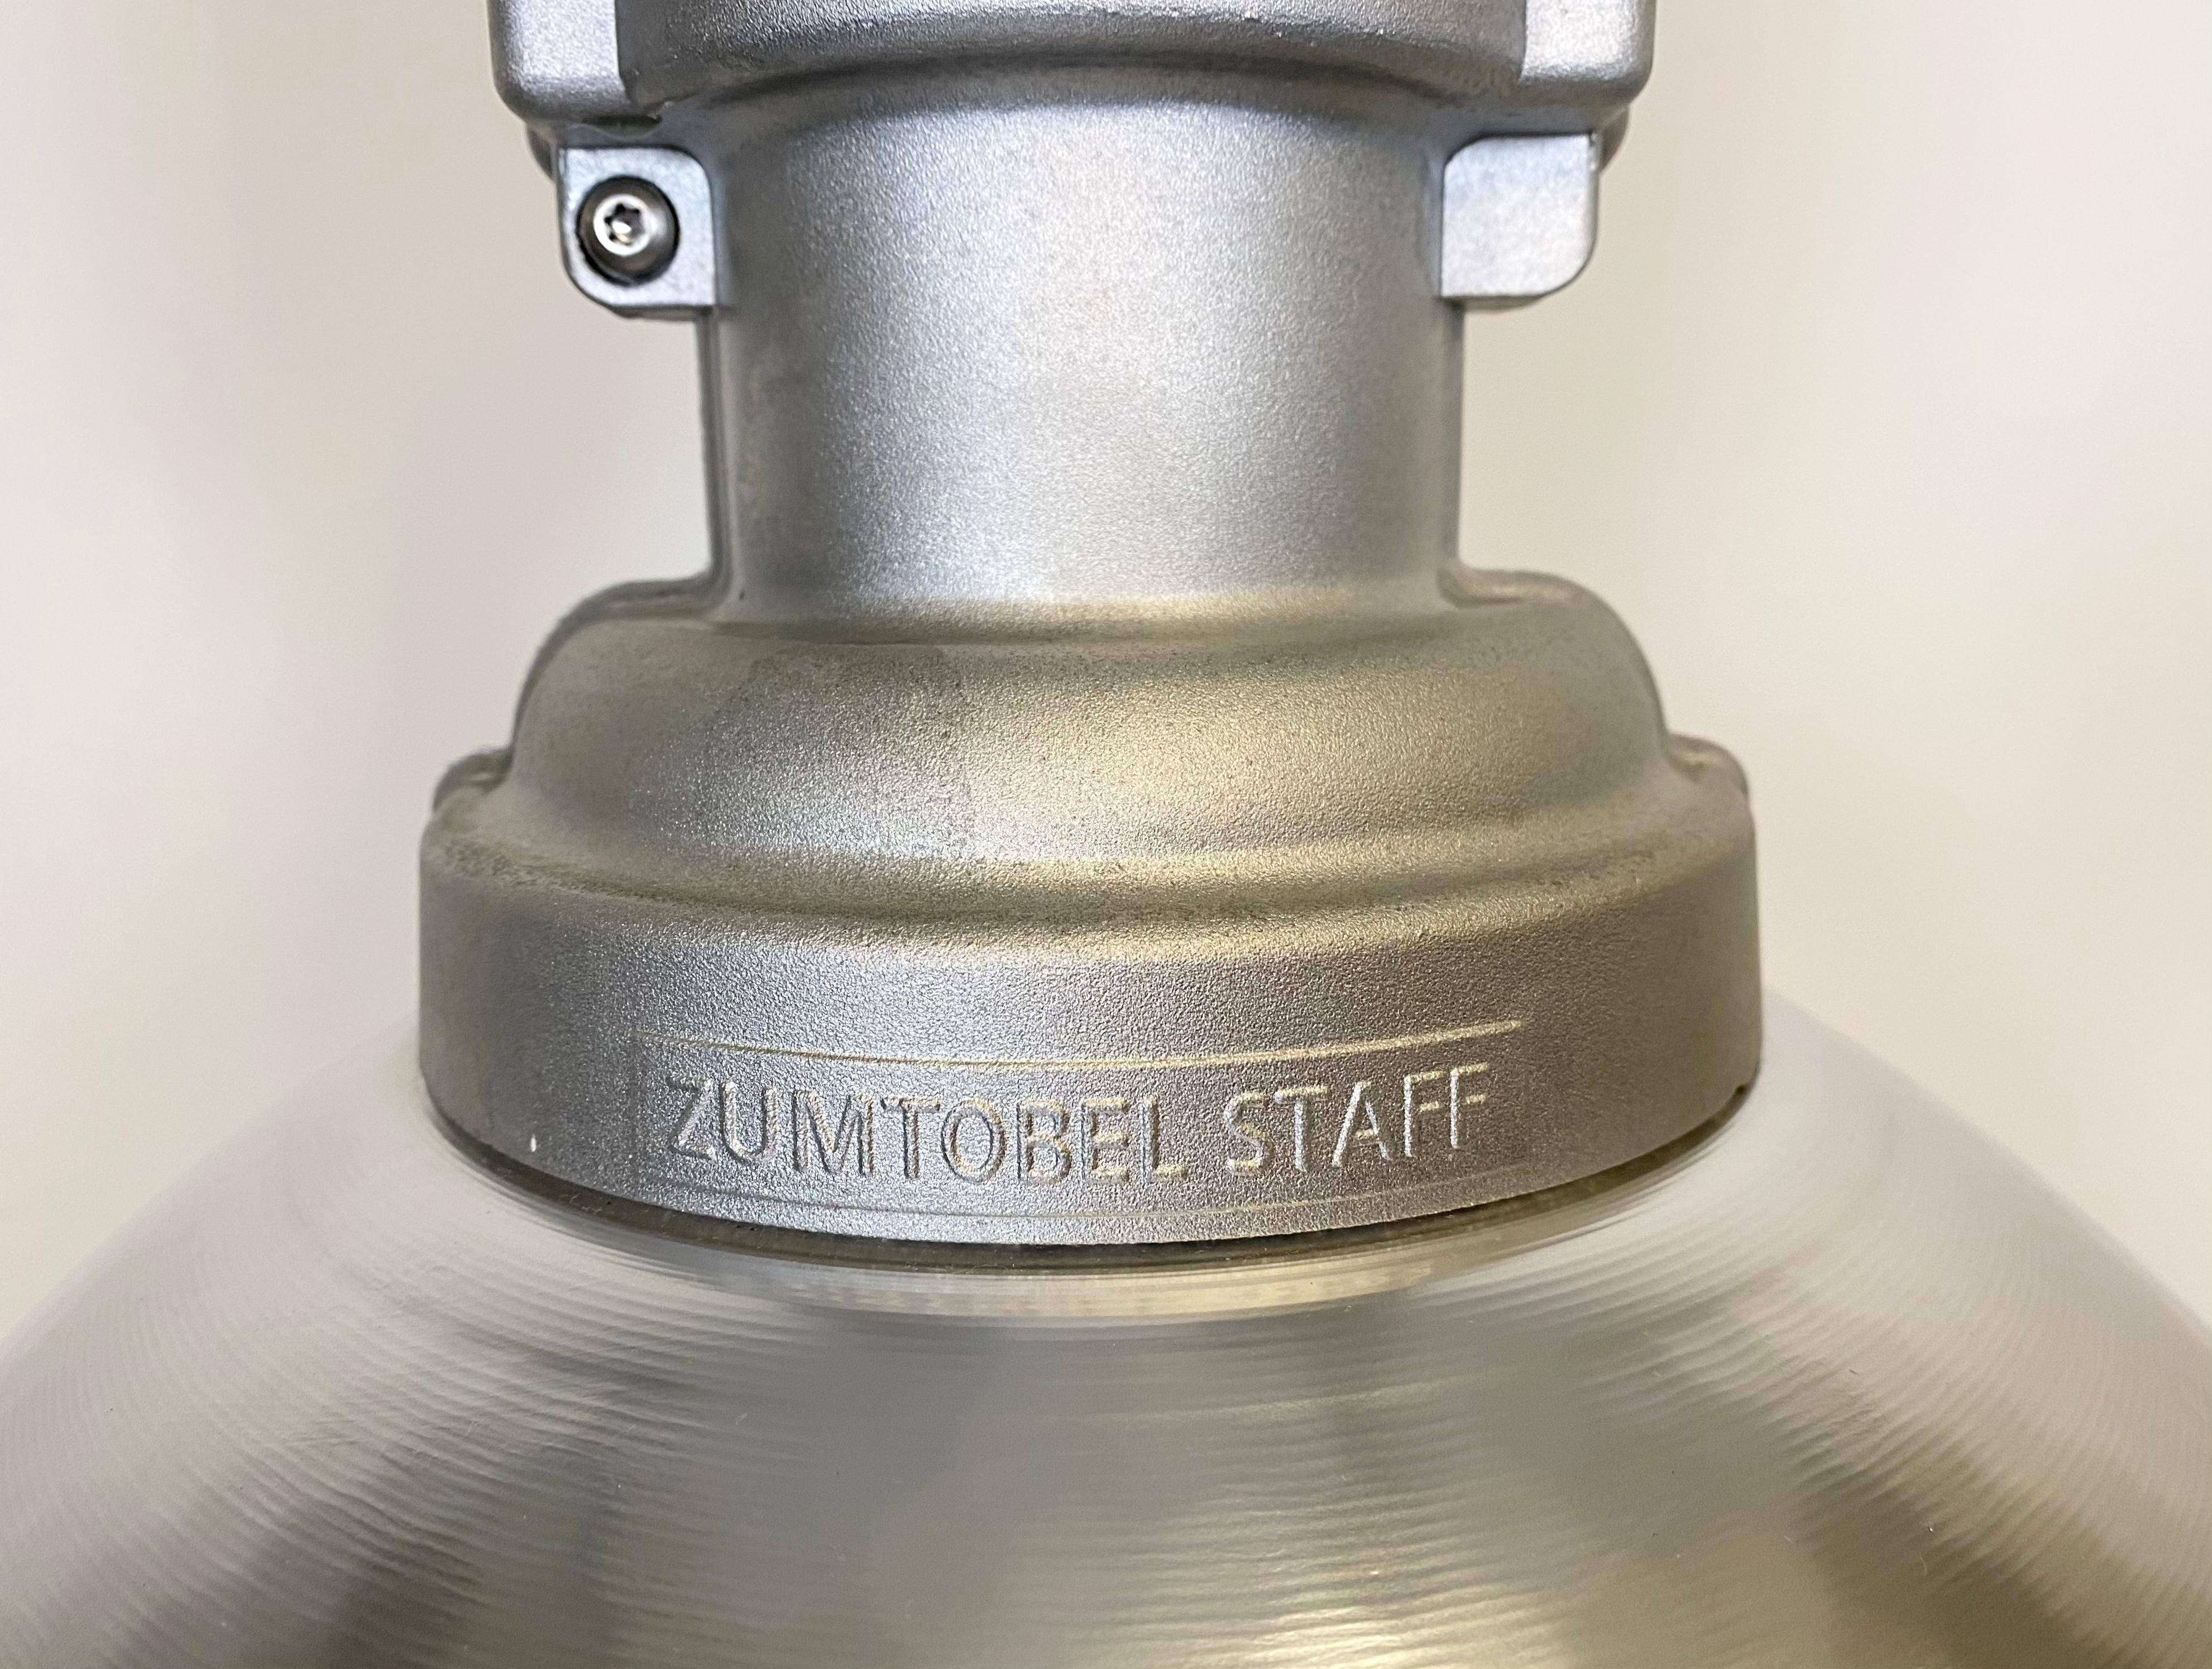 Aluminum Large Industrial Pendant Lamp by Charles Keller for Zumtobel Staff, 1990 For Sale